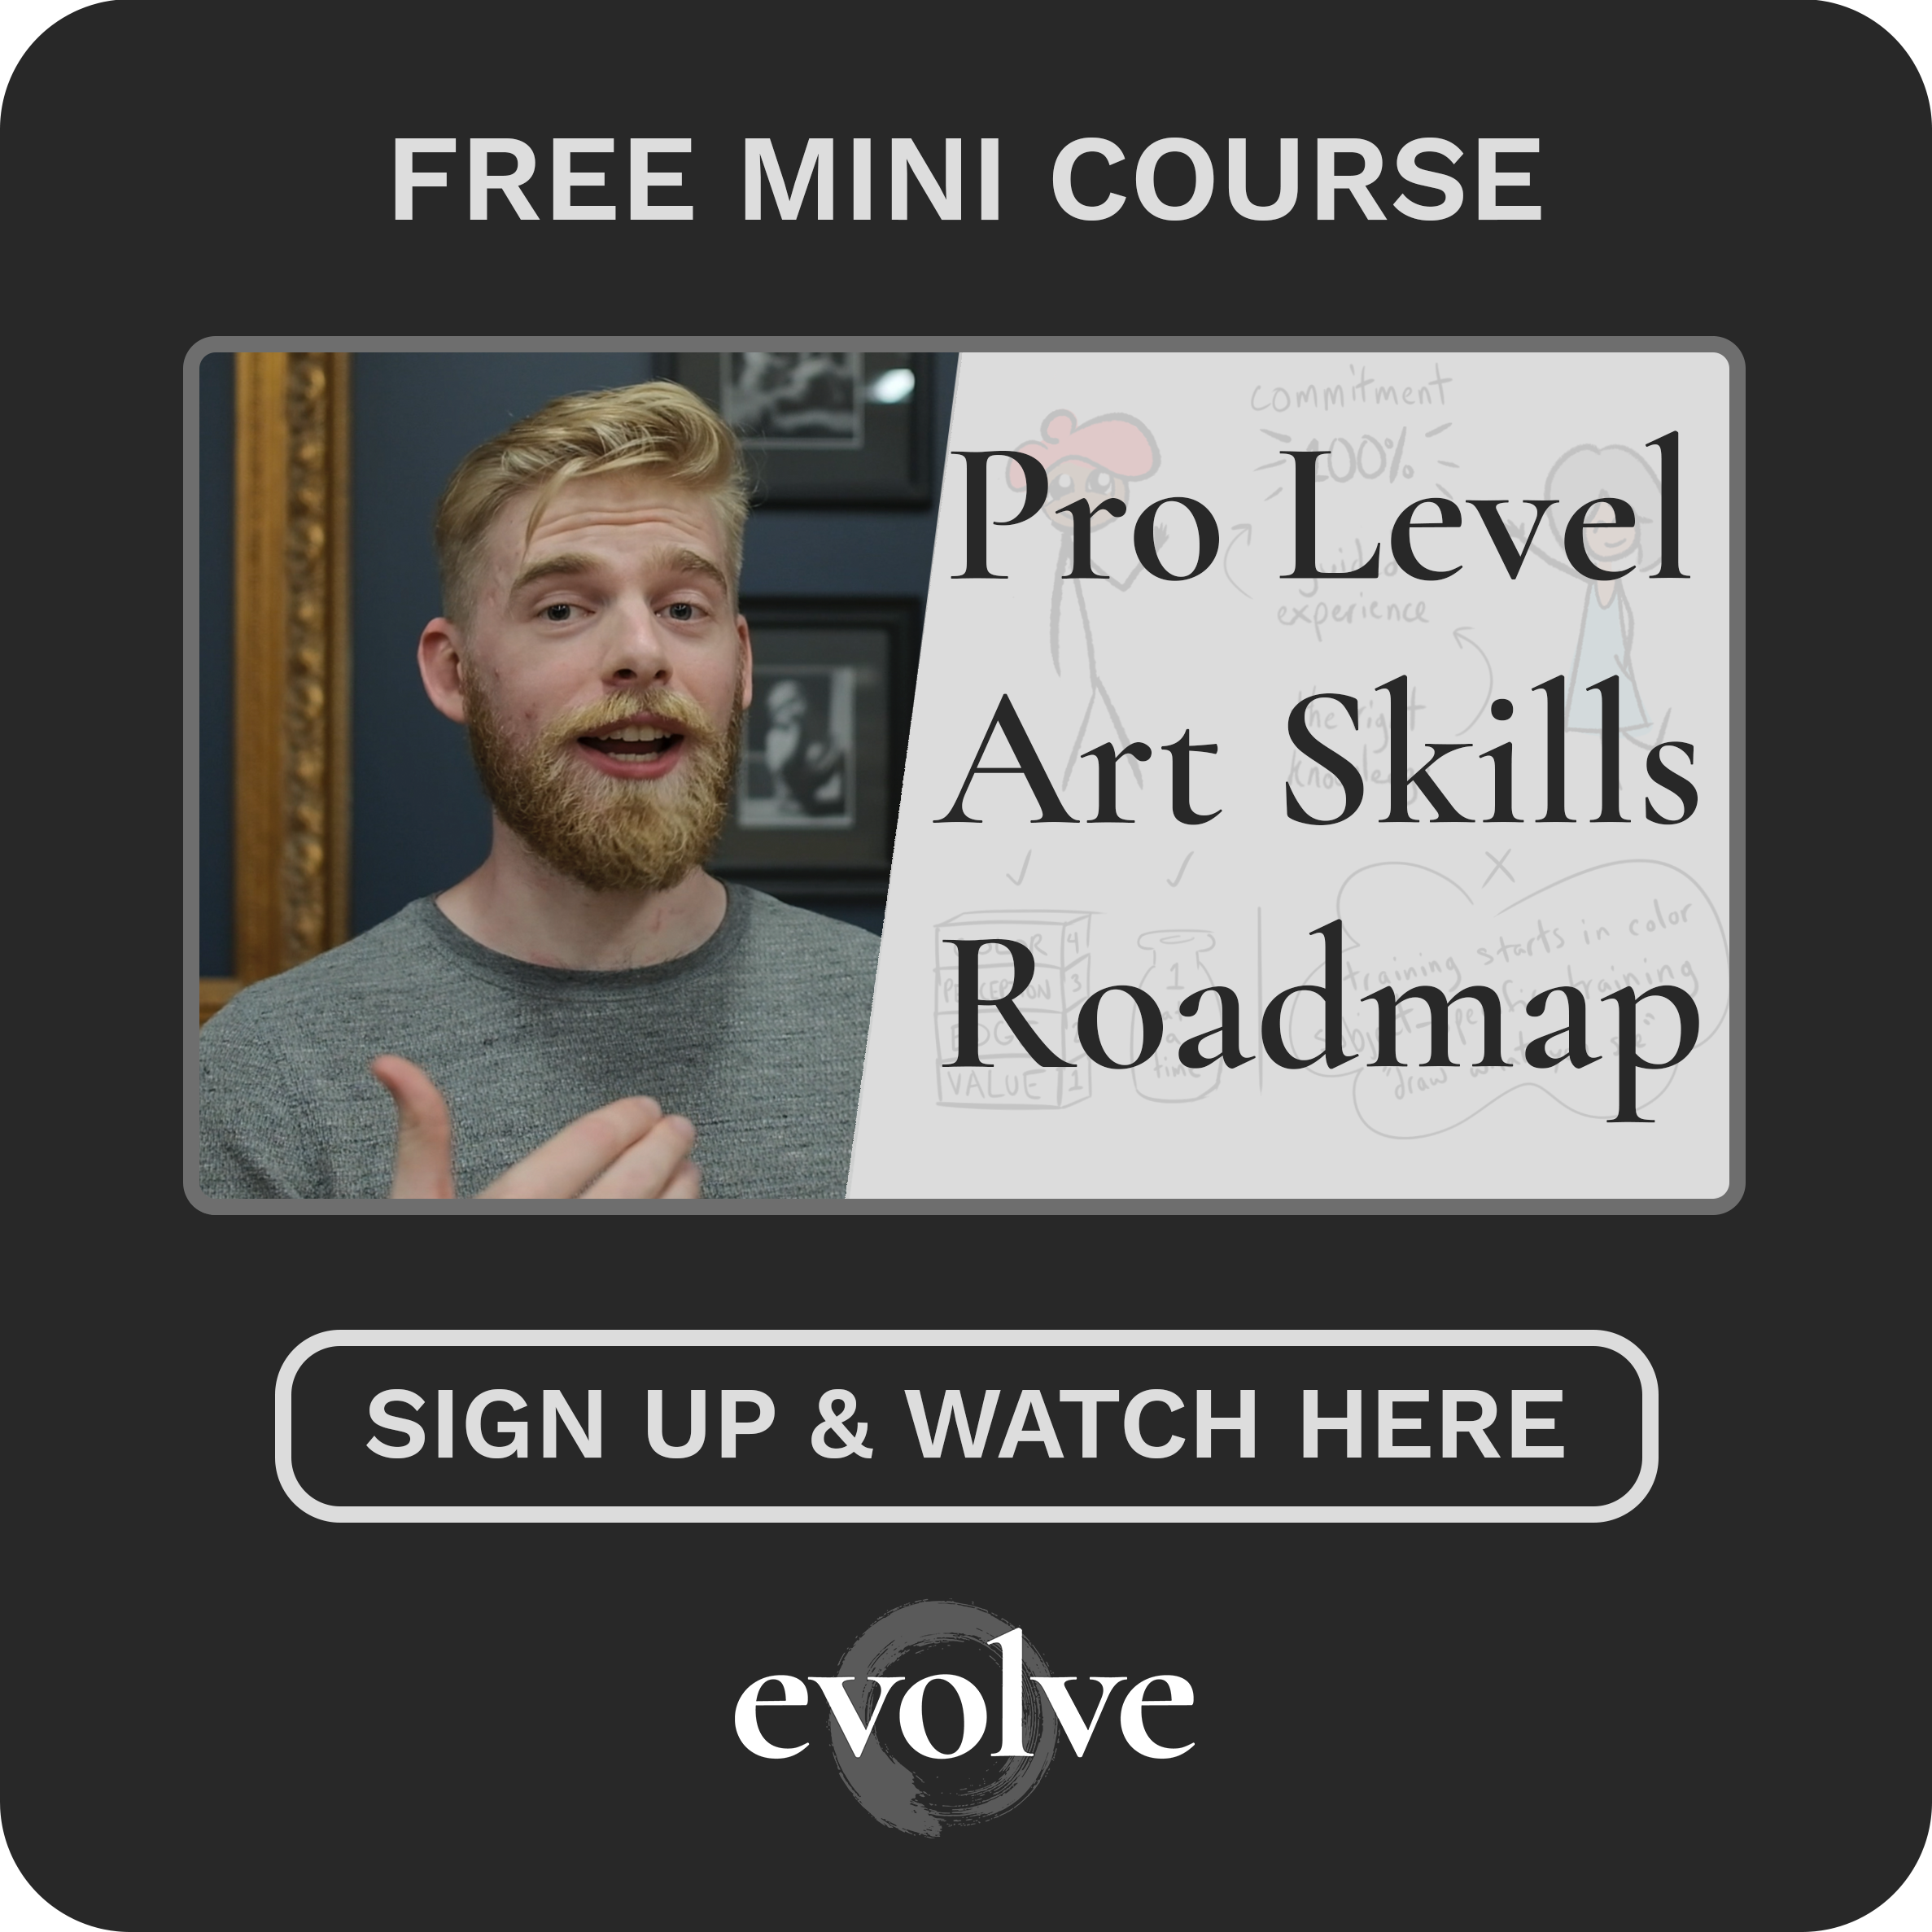 Free Mini Course for Pro Level Art Skills Roadmap Link